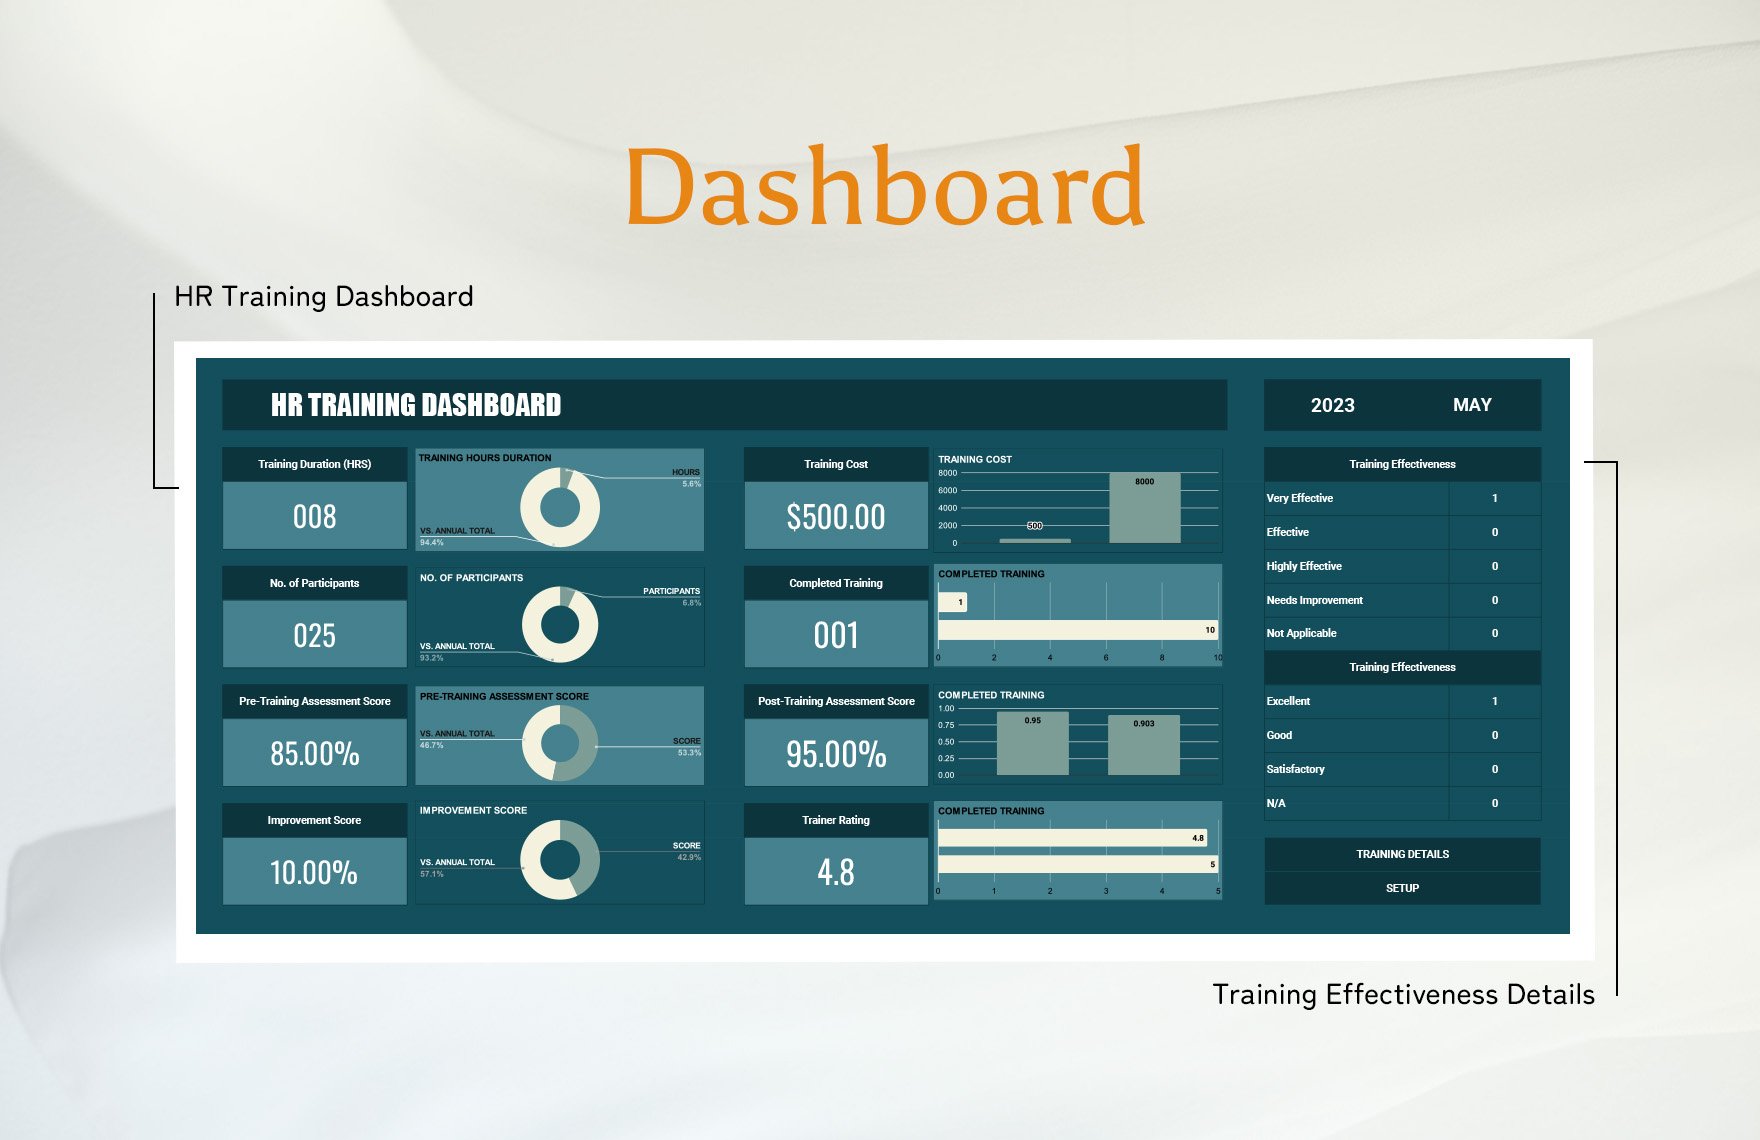 HR Training Dashboard Template 